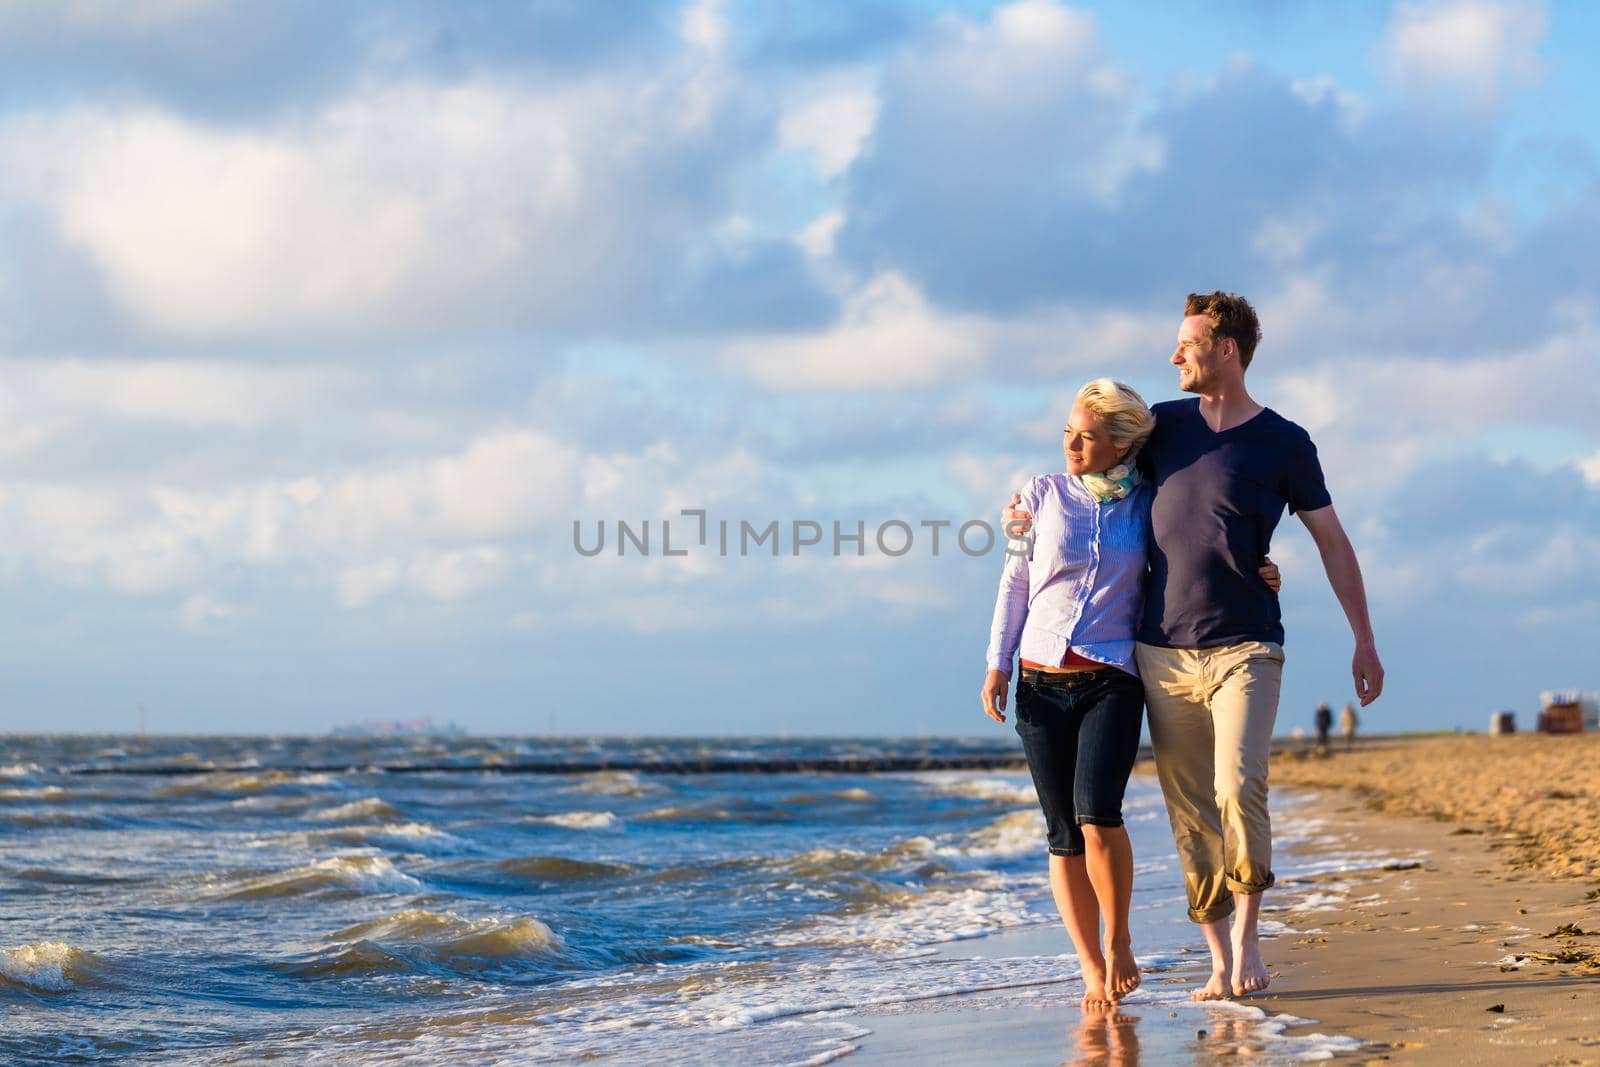 Couple take a romantic walk through sand and waves at German north sea beach